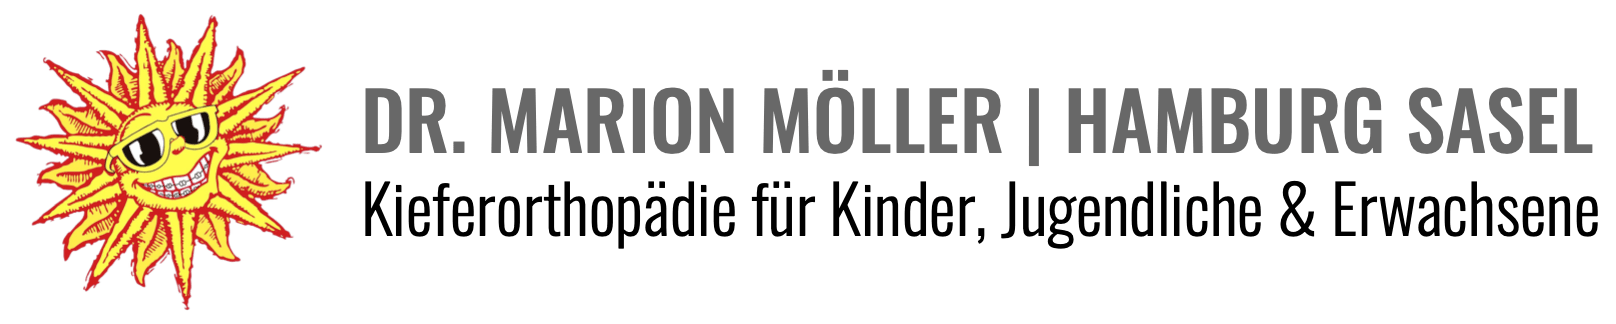 KFO-Praxis Dr. Marion Möller, Hamburg Sasel